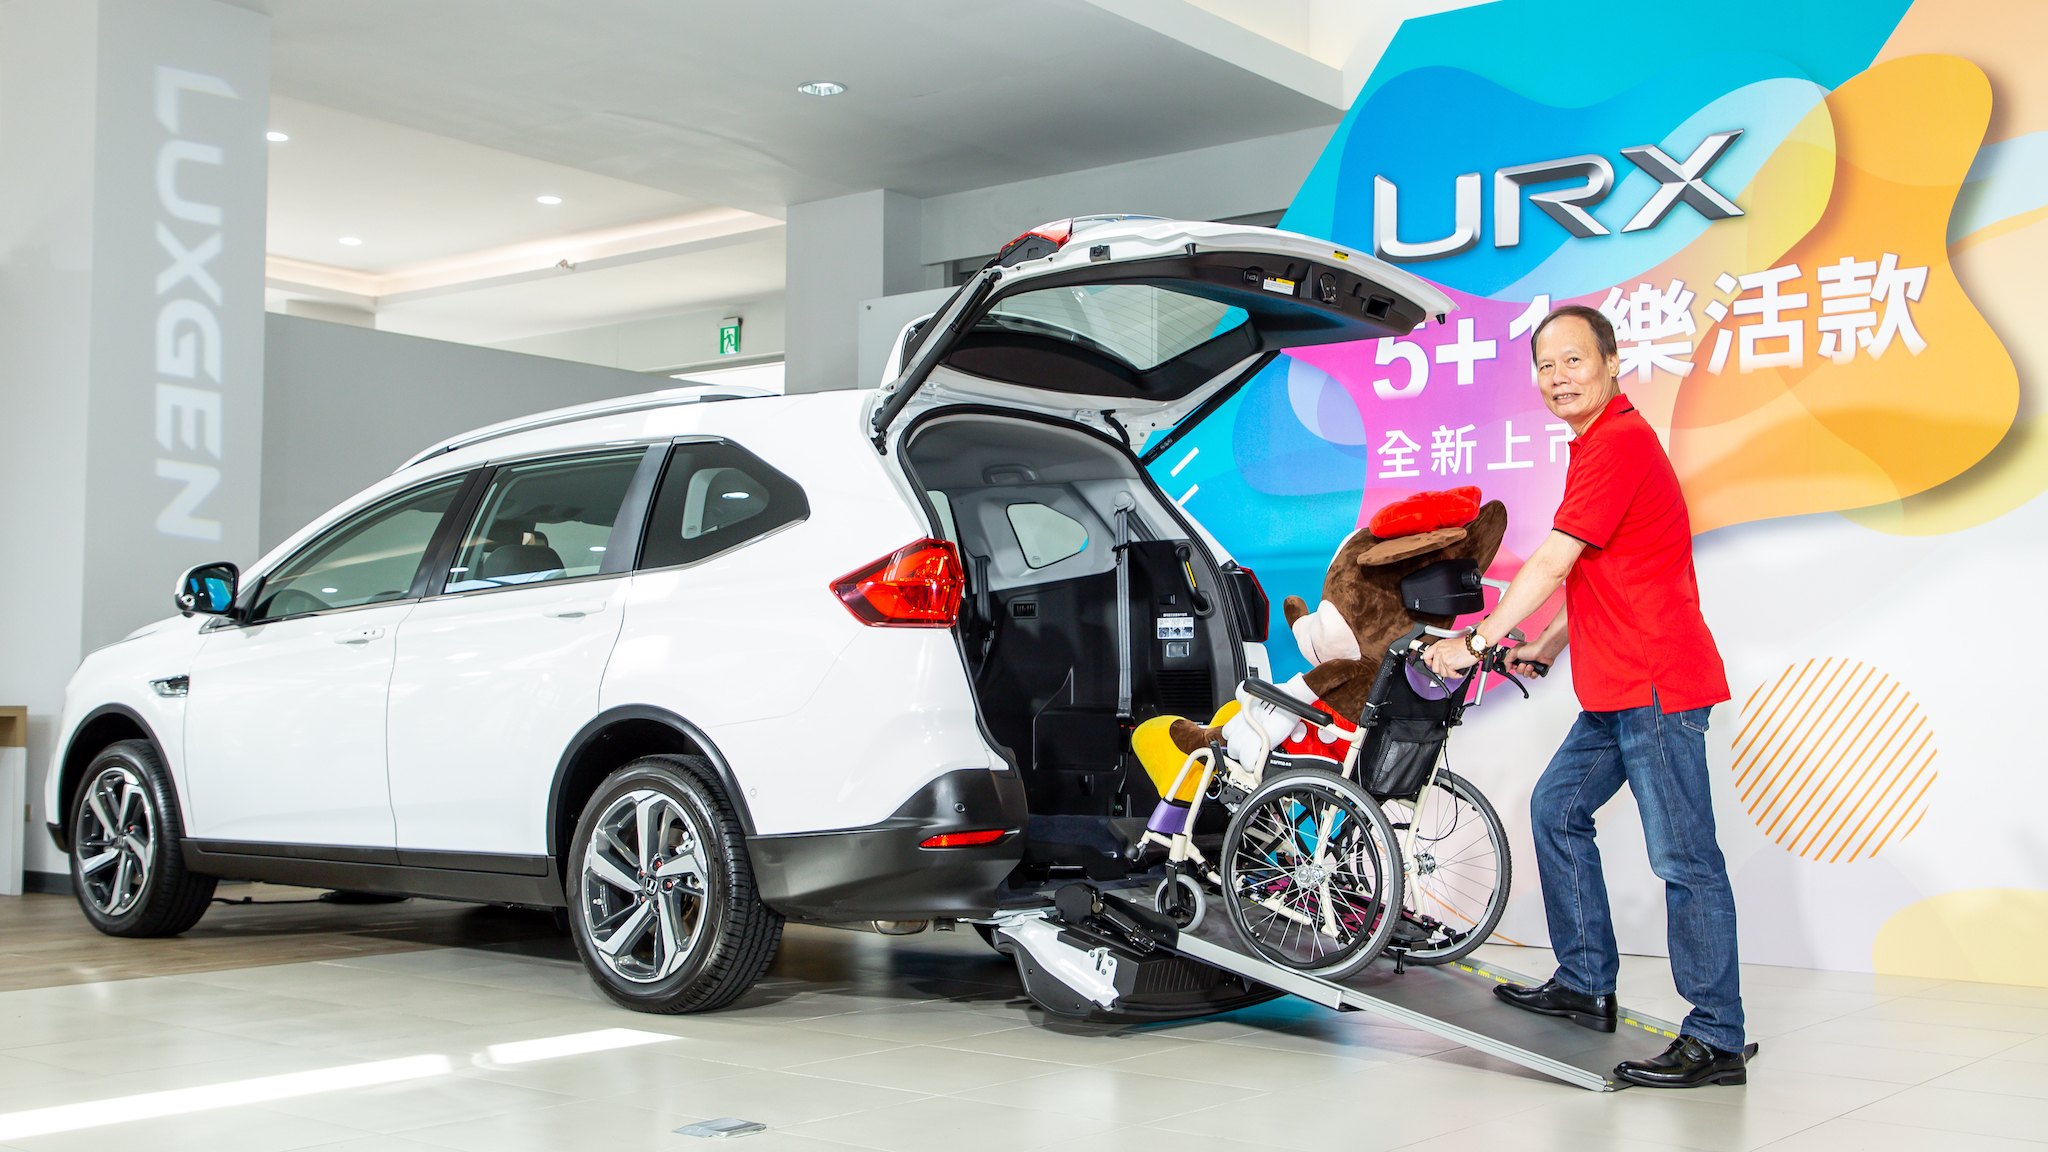 Luxgen URX 5+1 樂活款輪椅快扣裝置獲 2020 iF 設計大獎